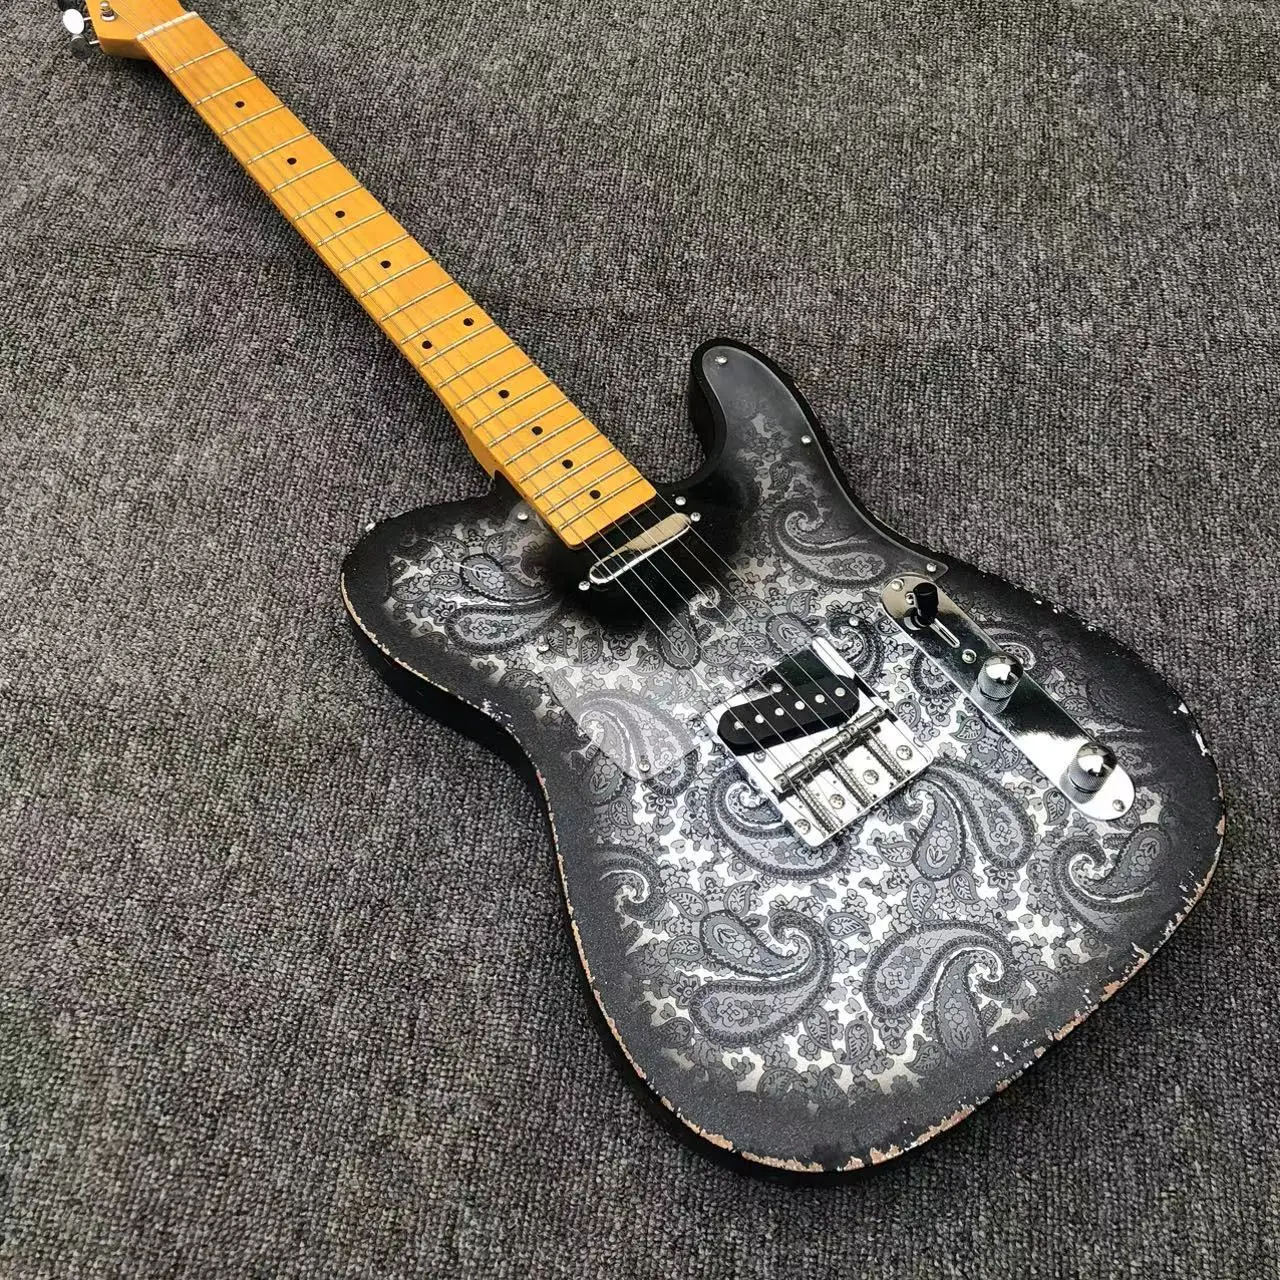 

Relic Electric Guitar, Amoeba "Paisley" Guitar body, Maple neck, Maple fingerboard, transparent Pickup guard